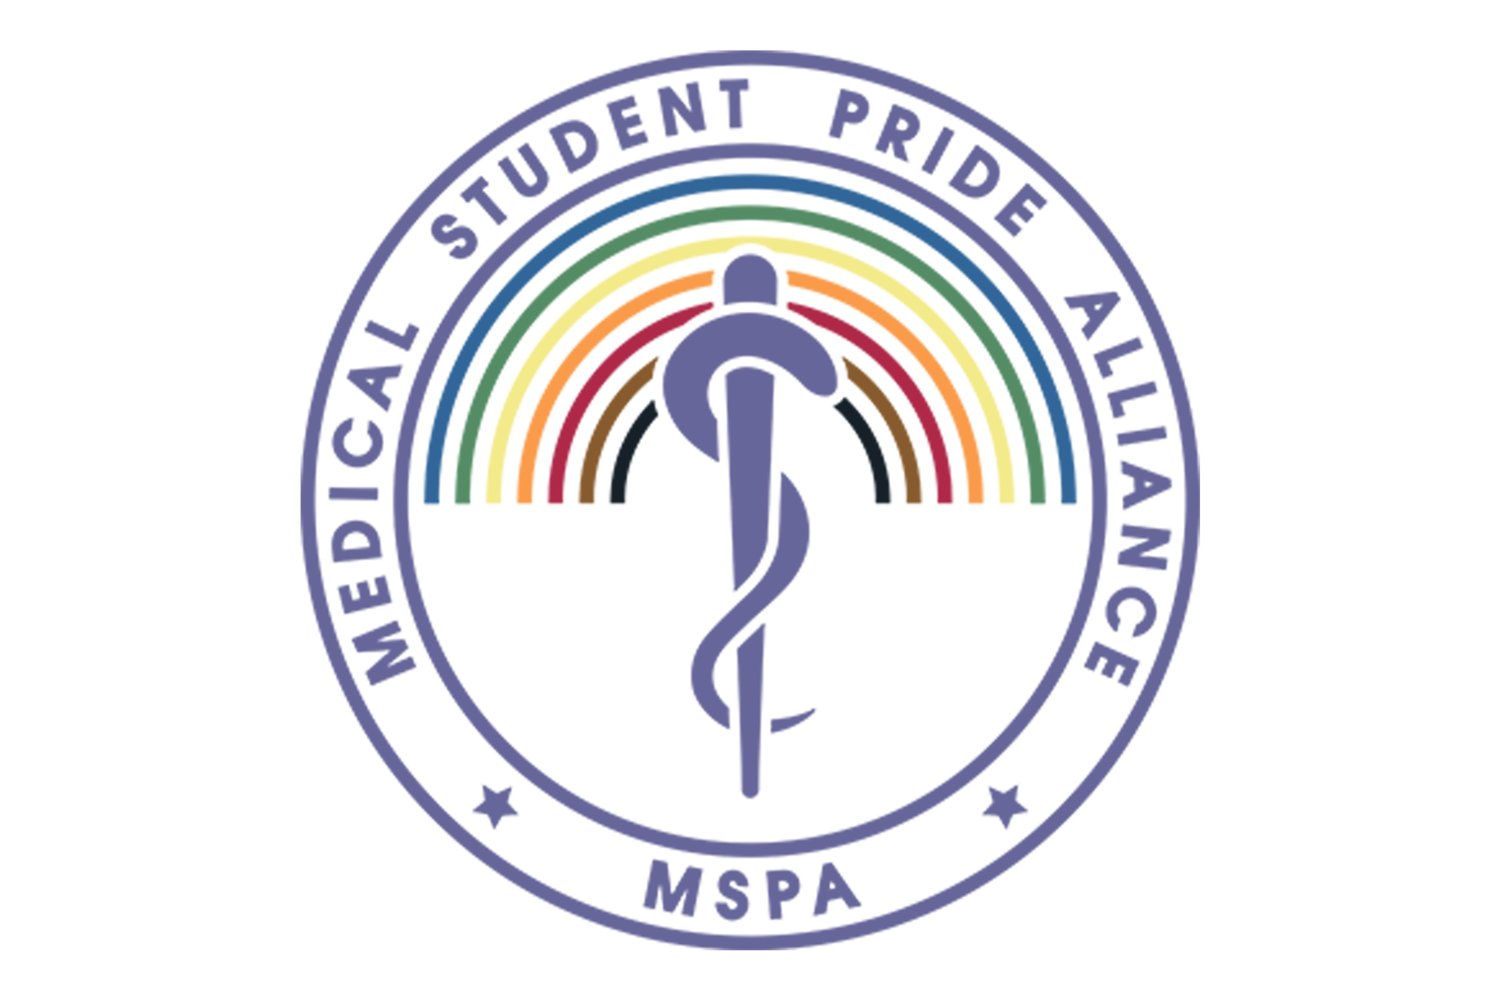 Medical Student Pride alliance logo